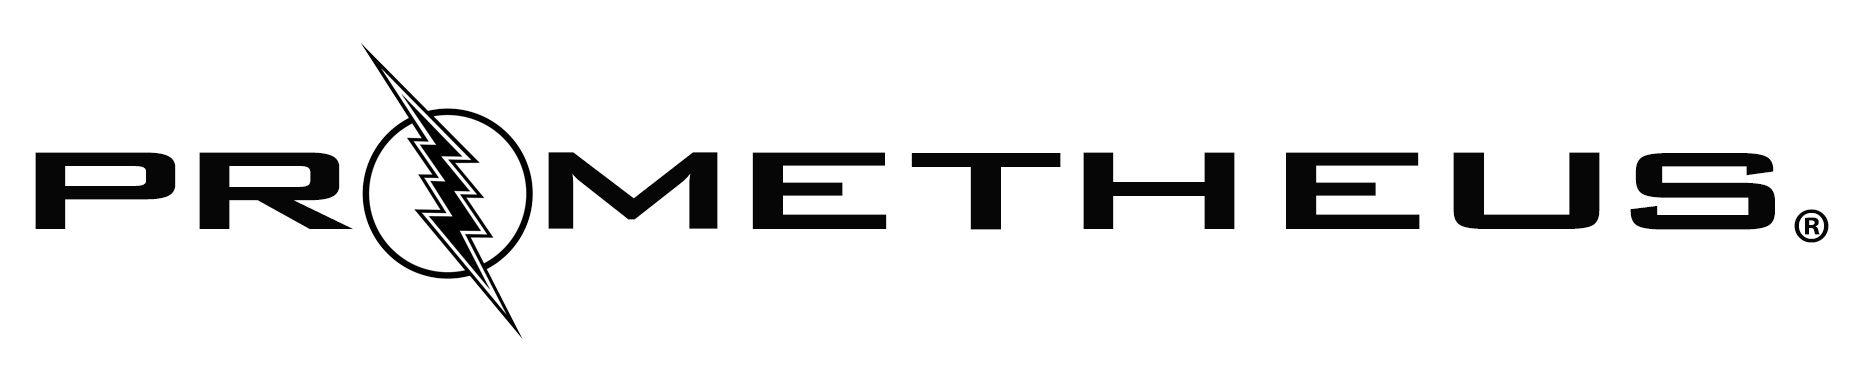 Prometheus Logo - Prometheus Logo